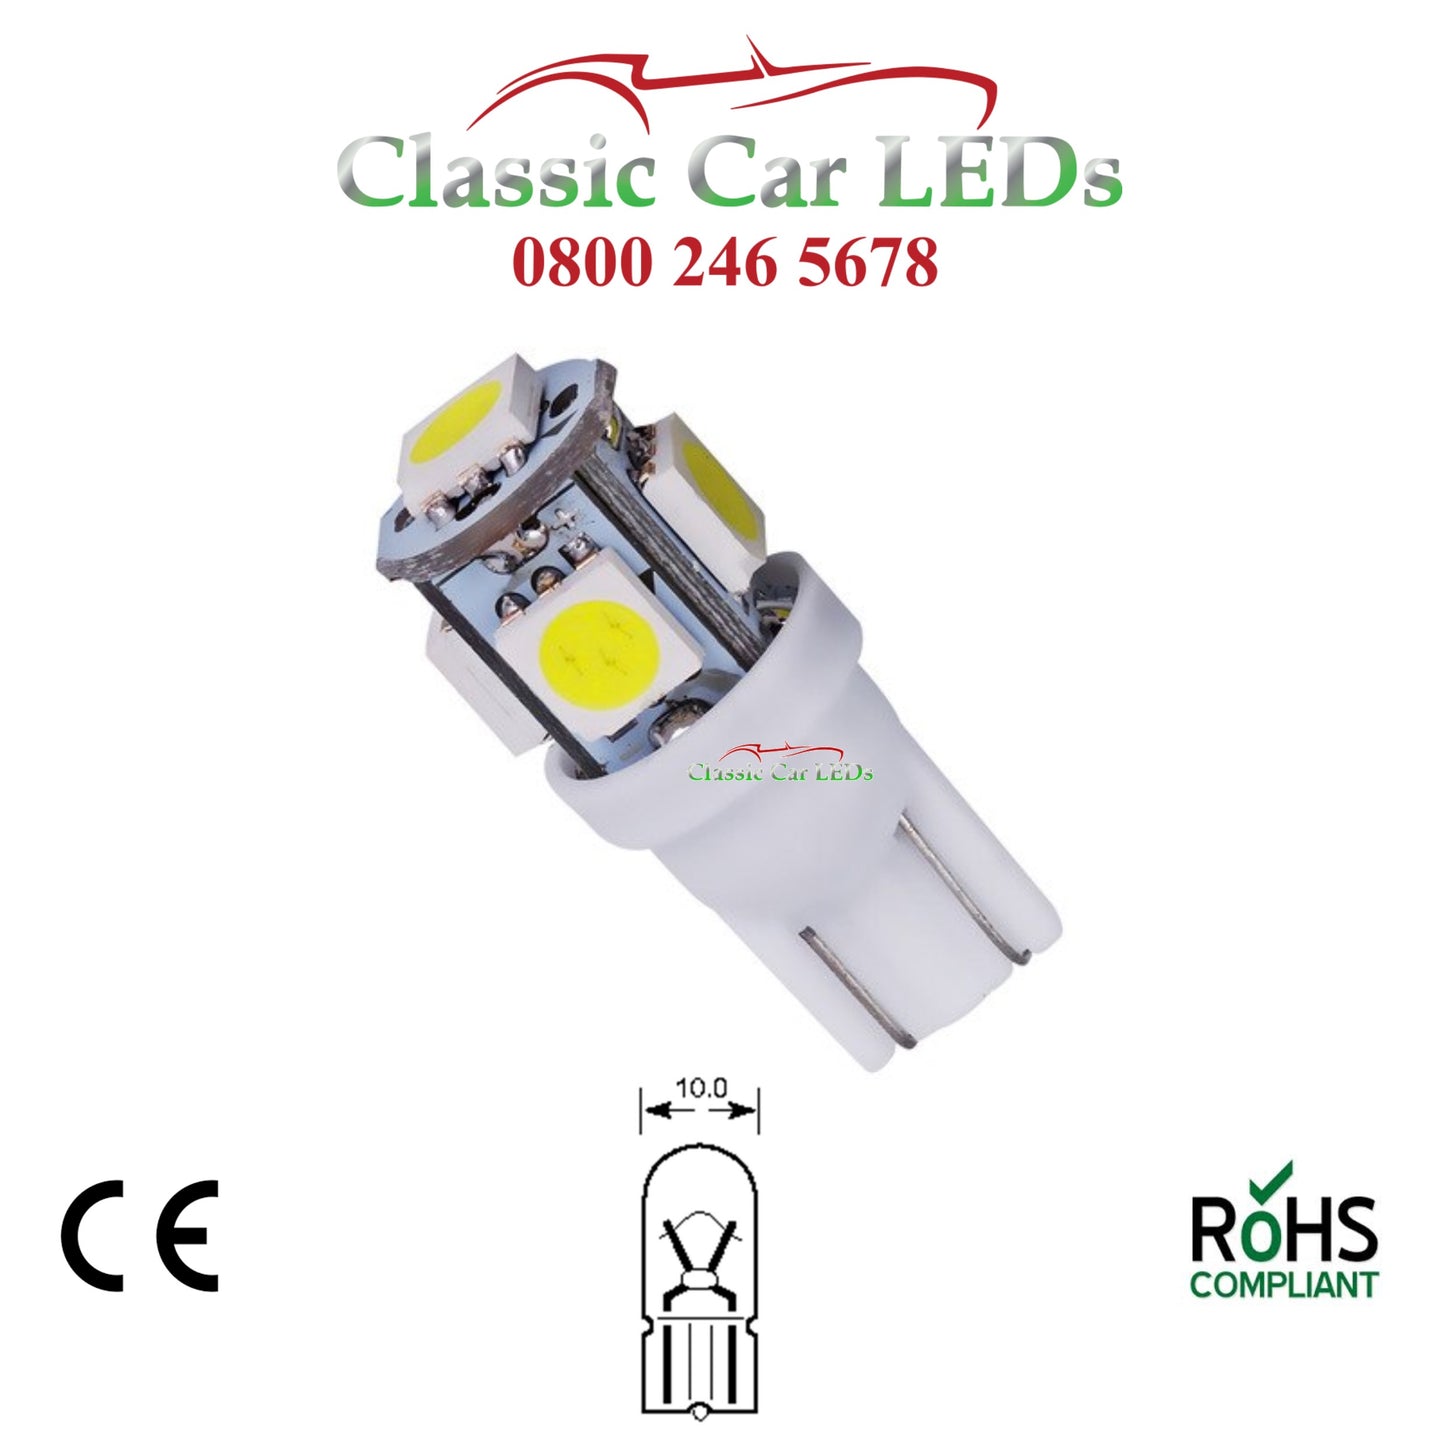 13x Rover P6 3500S LED Dashboard Upgrade Bulbs T10 501 504 Capless Wedge W5W W3W